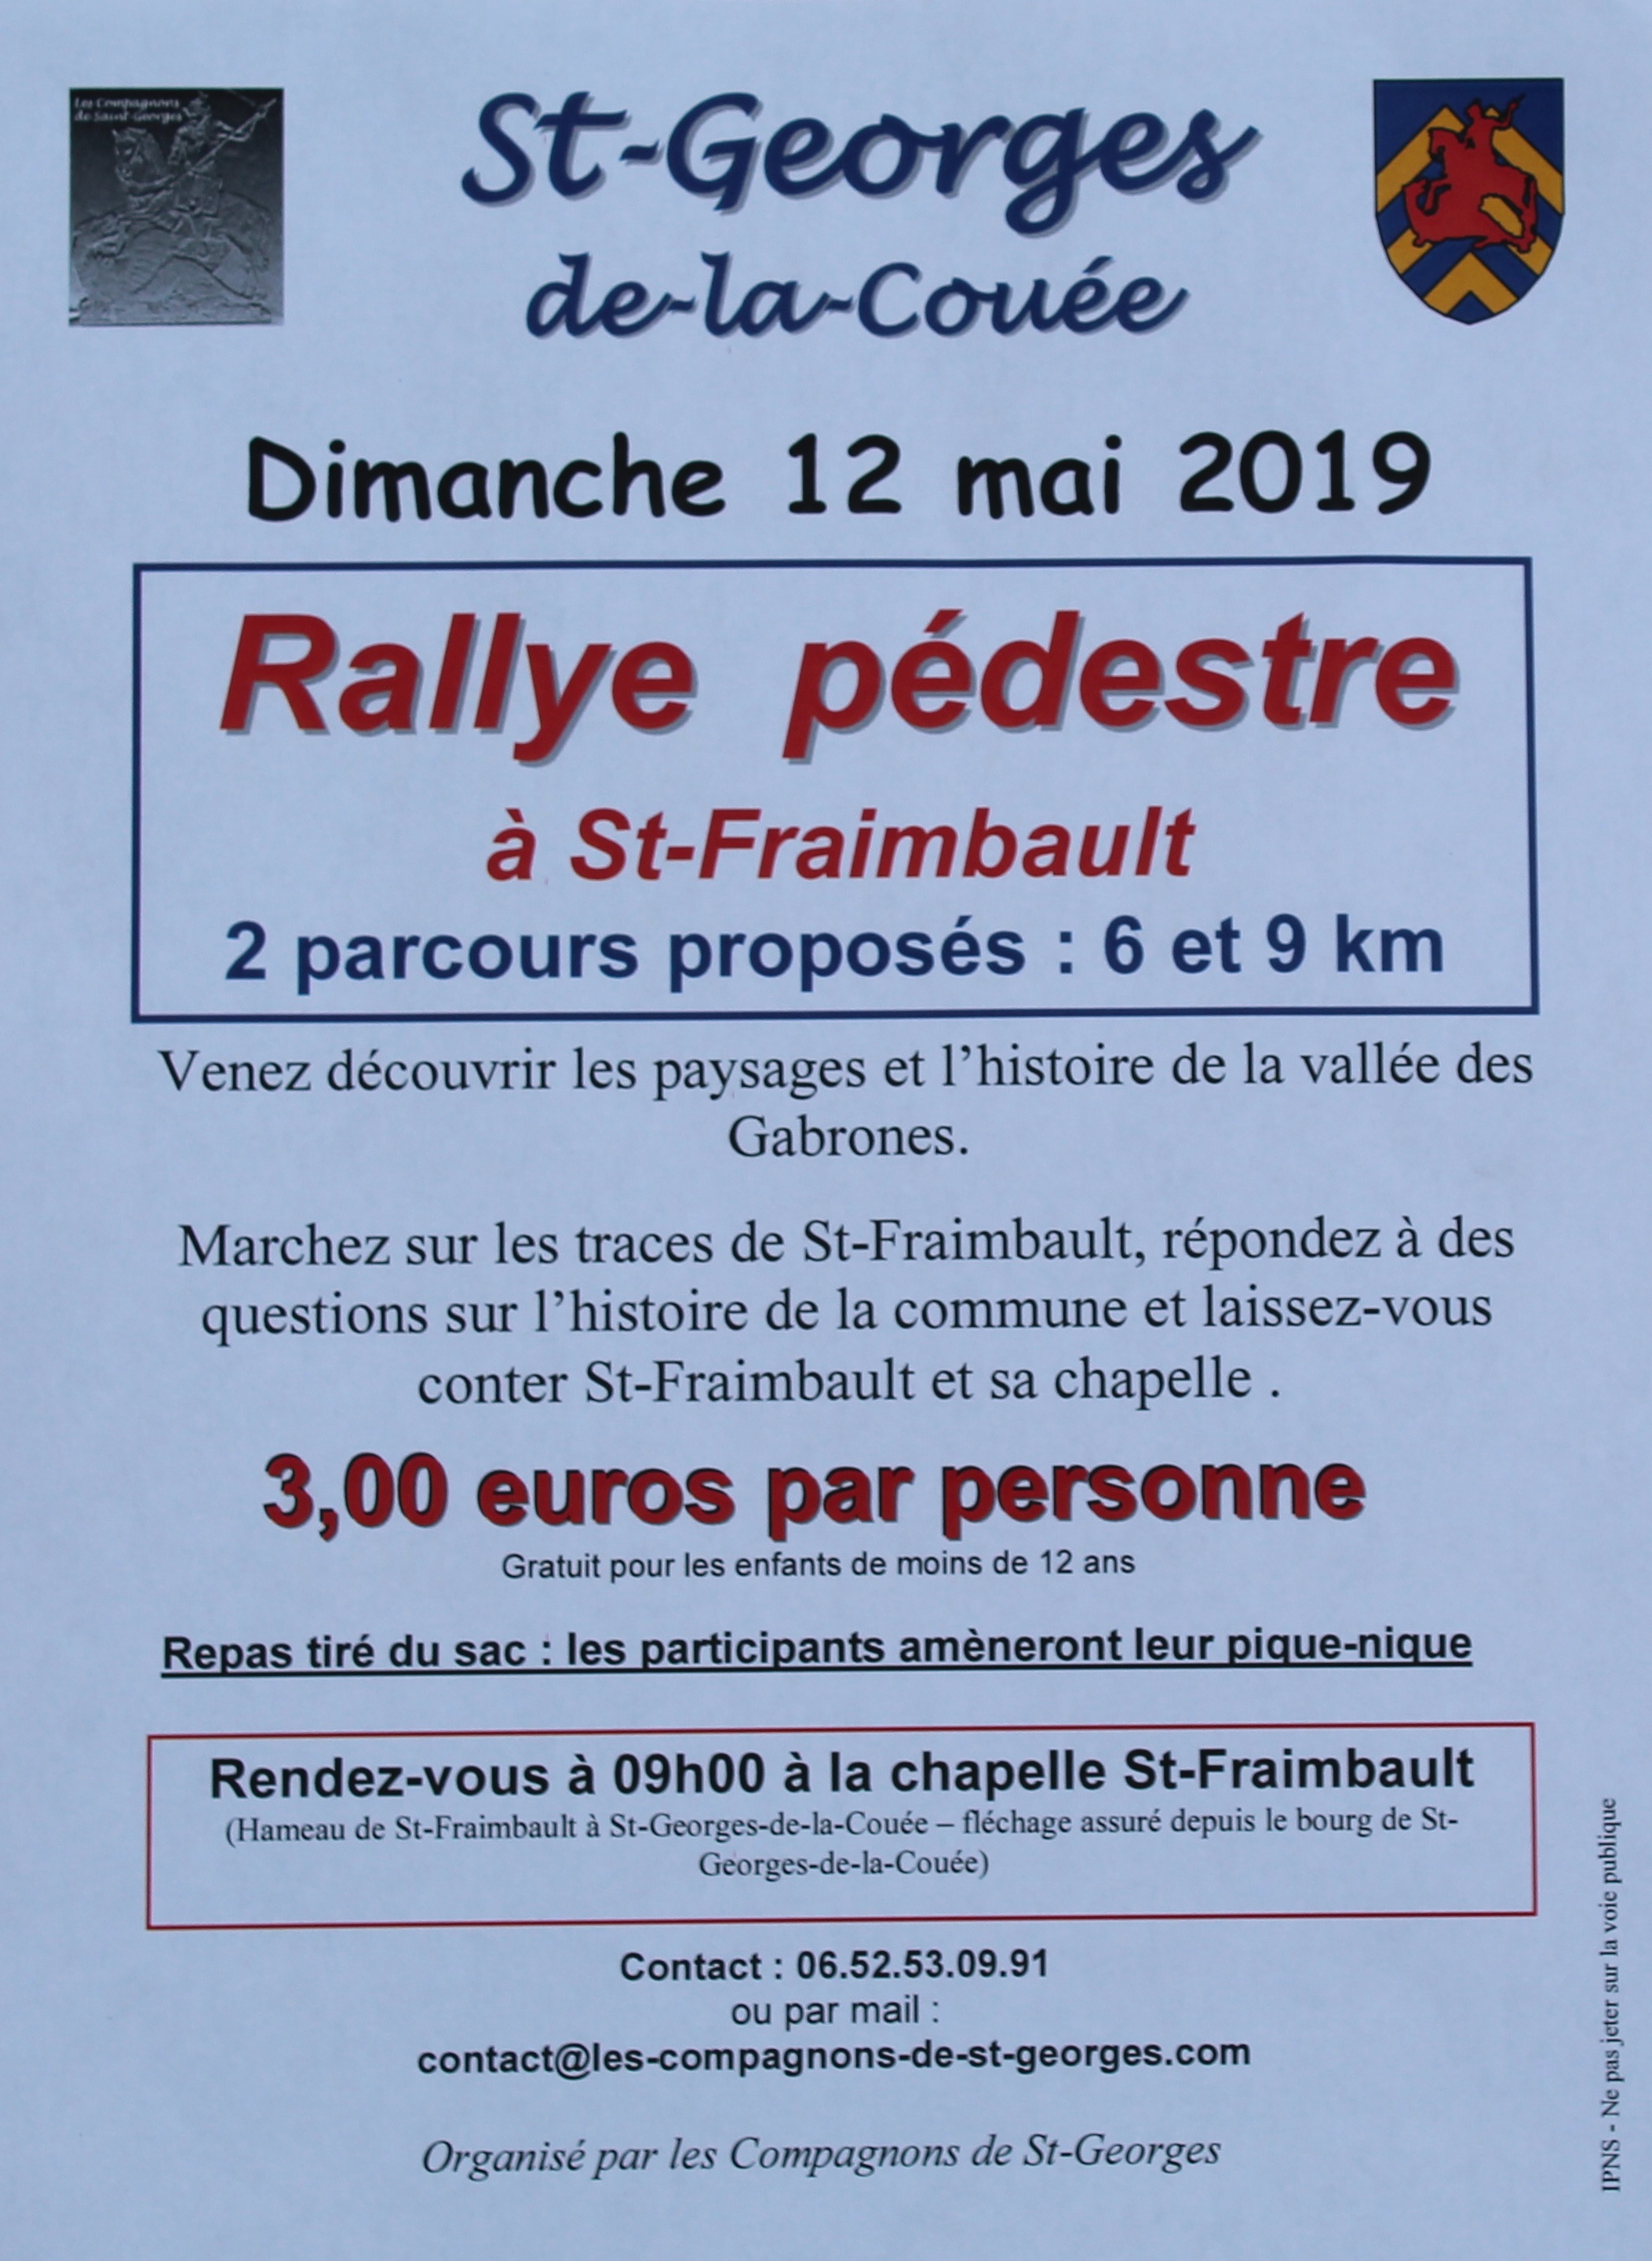 Rallye pédestre le 12 mai 2019